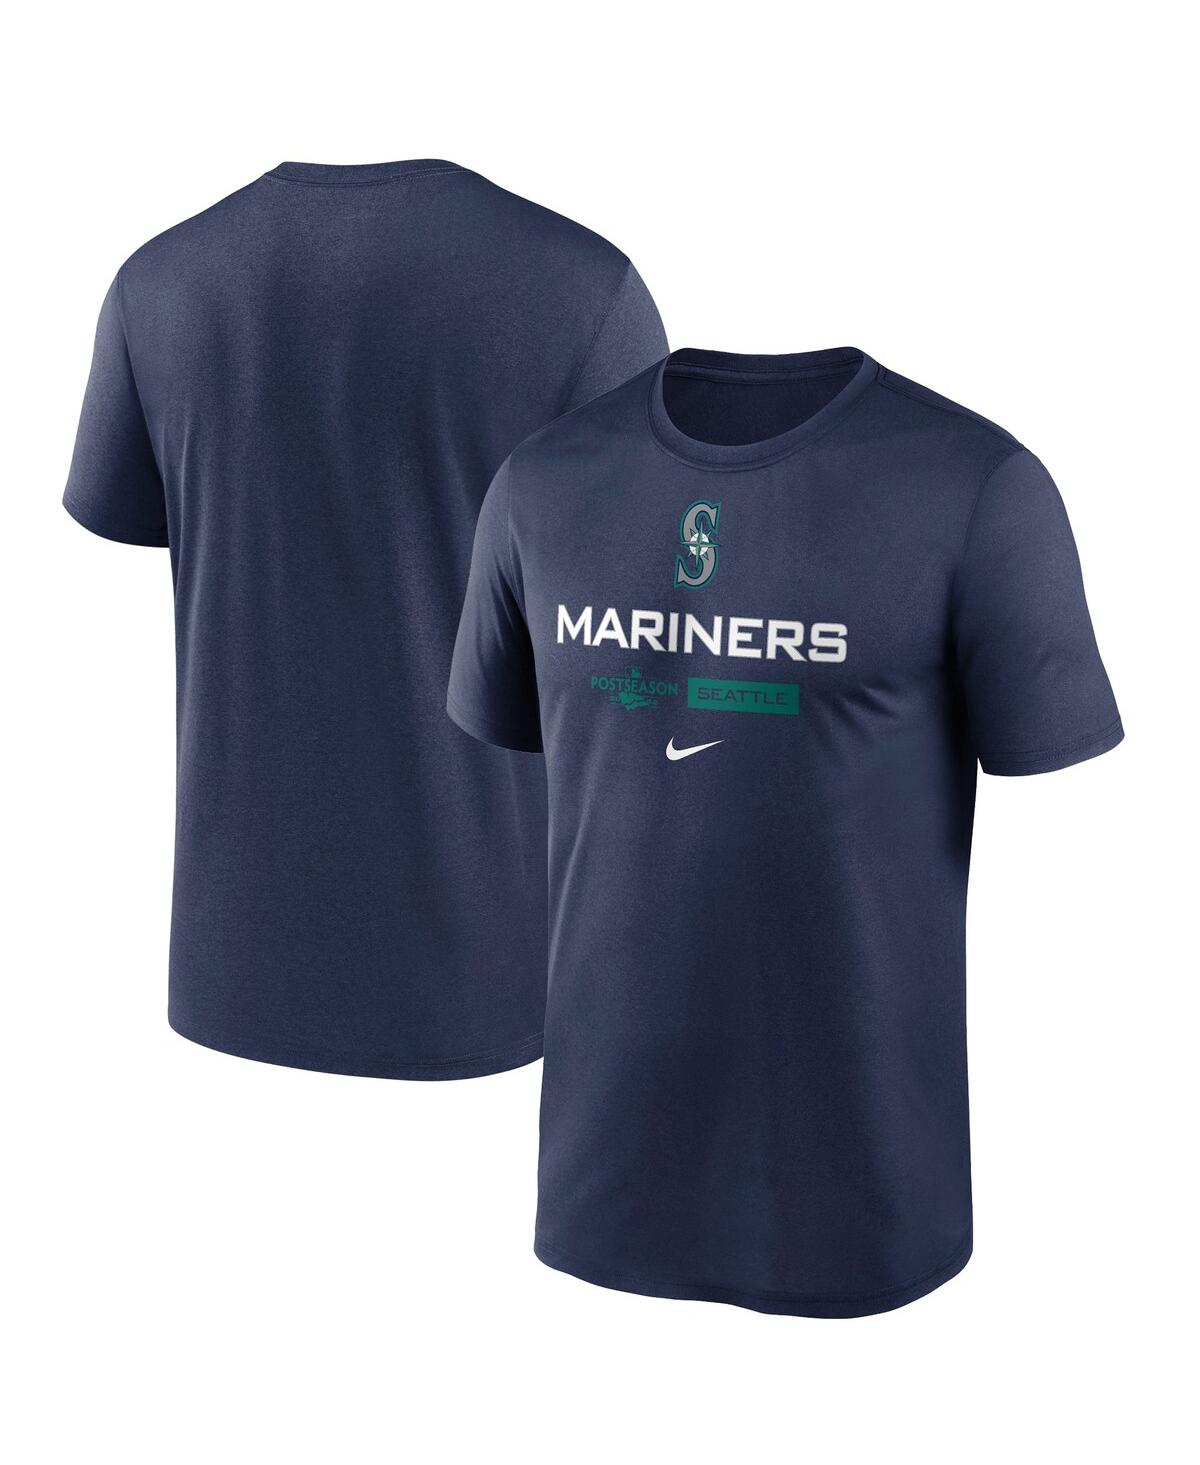 Large) Bundle: 2 New Nike Dri-Fit Shirts - Blue Jays & Mariners